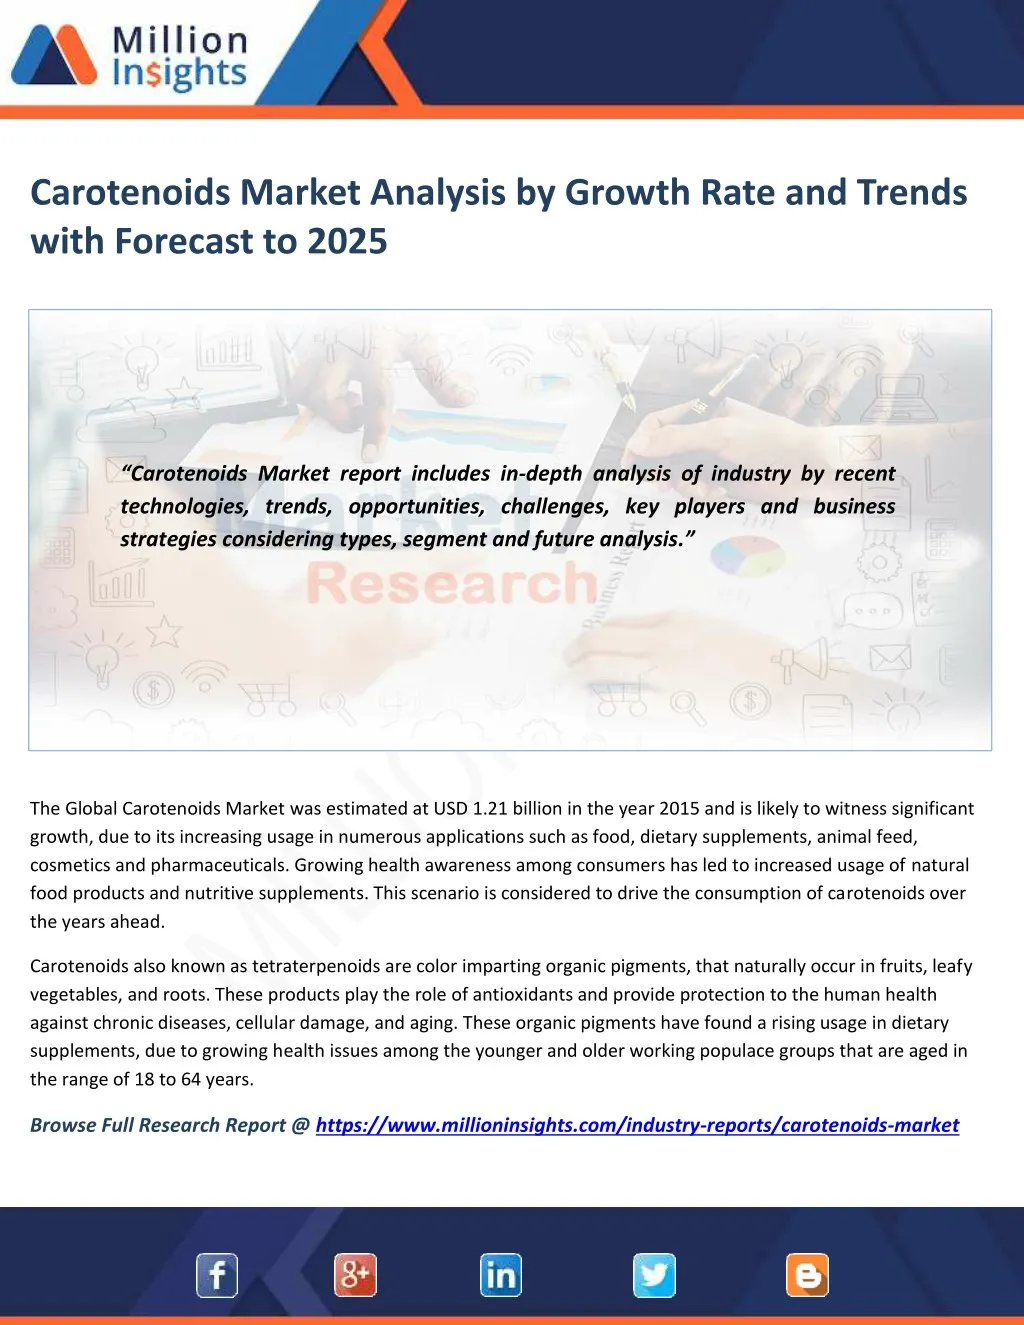 carotenoids market analysis by growth rate